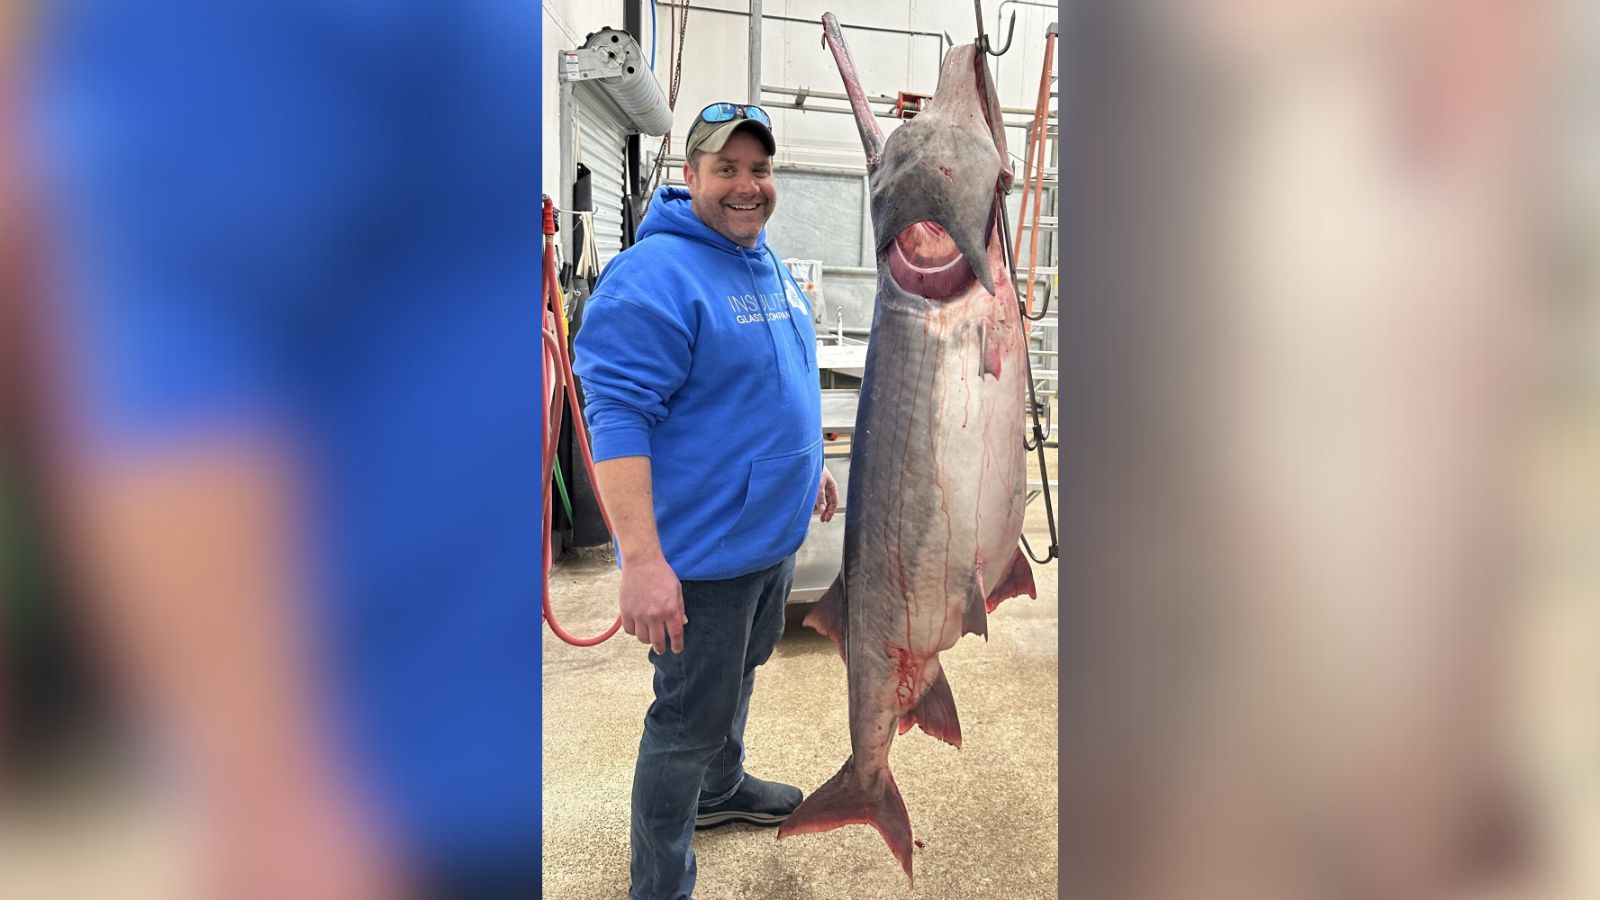 Beginner's luck: Olathe man snags world-record fish